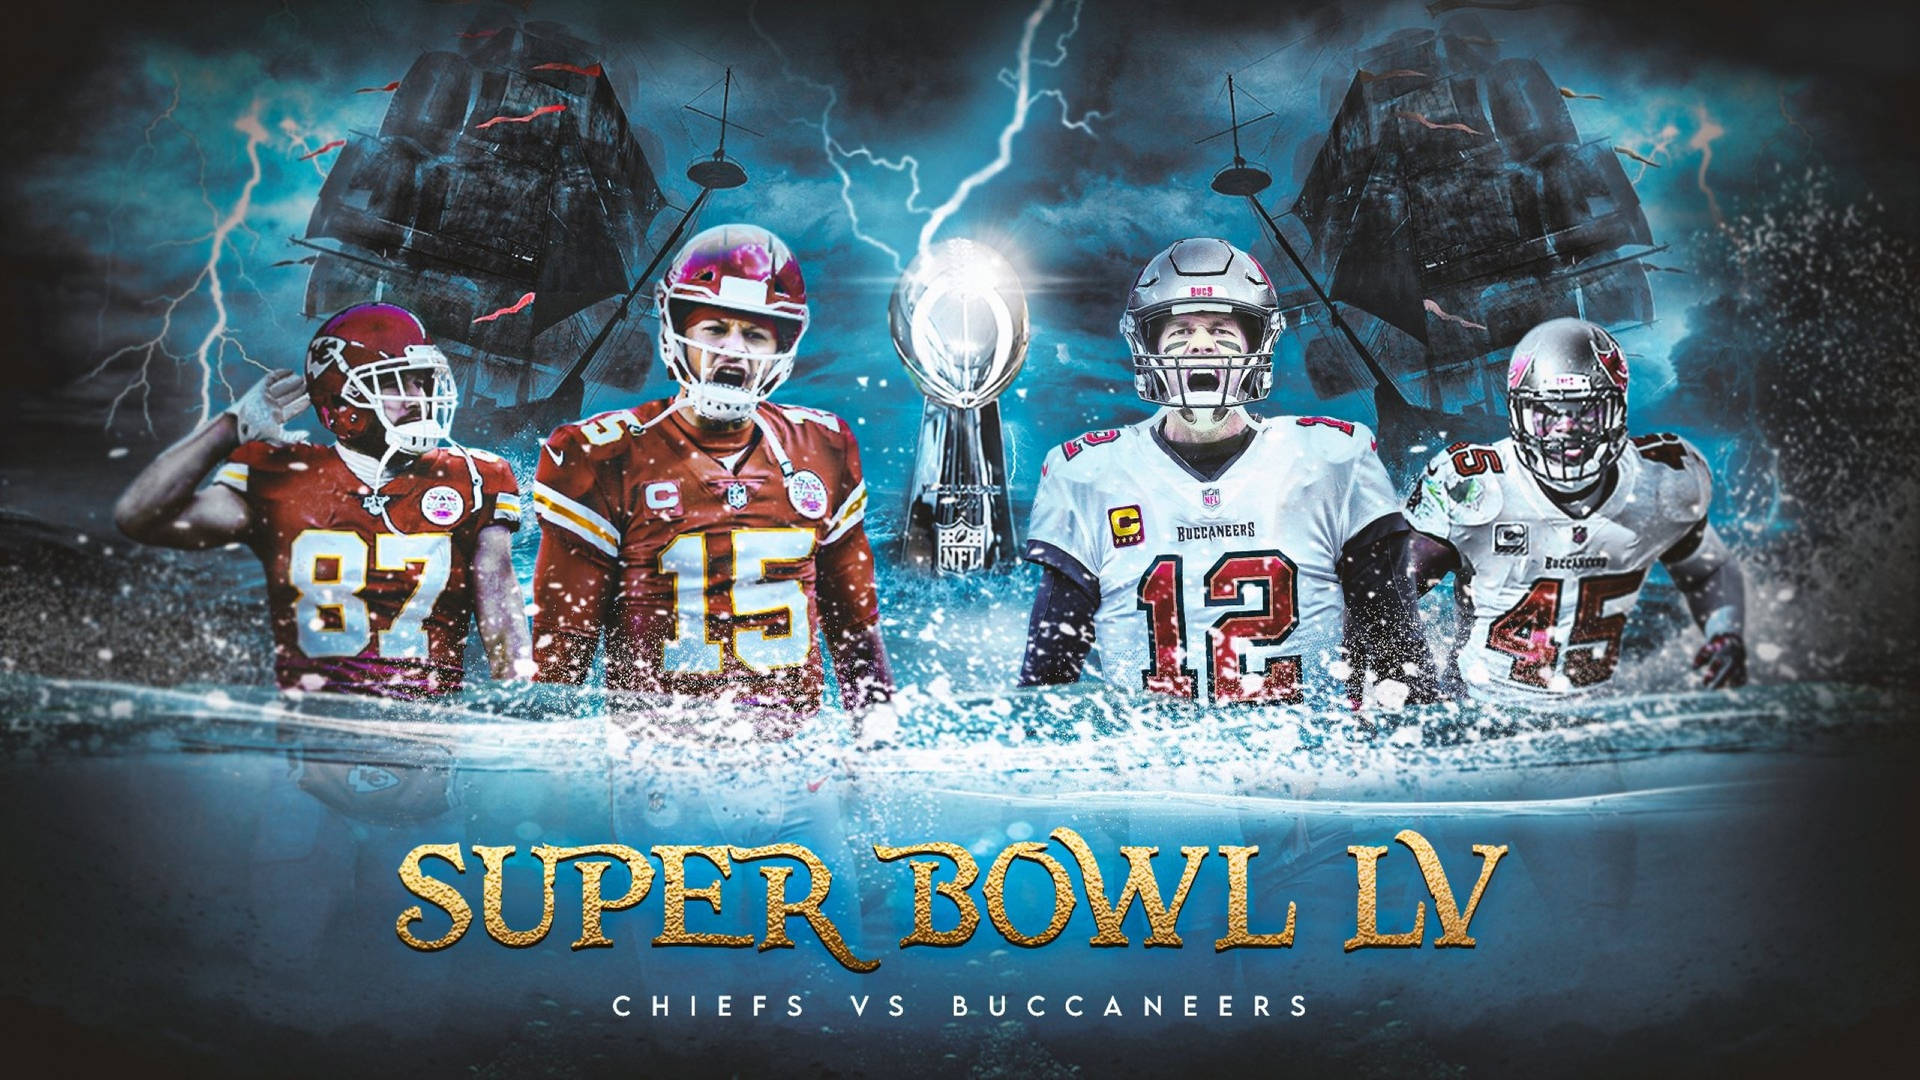 Super Bowl Lv Chiefs Vs Buccaneers Background